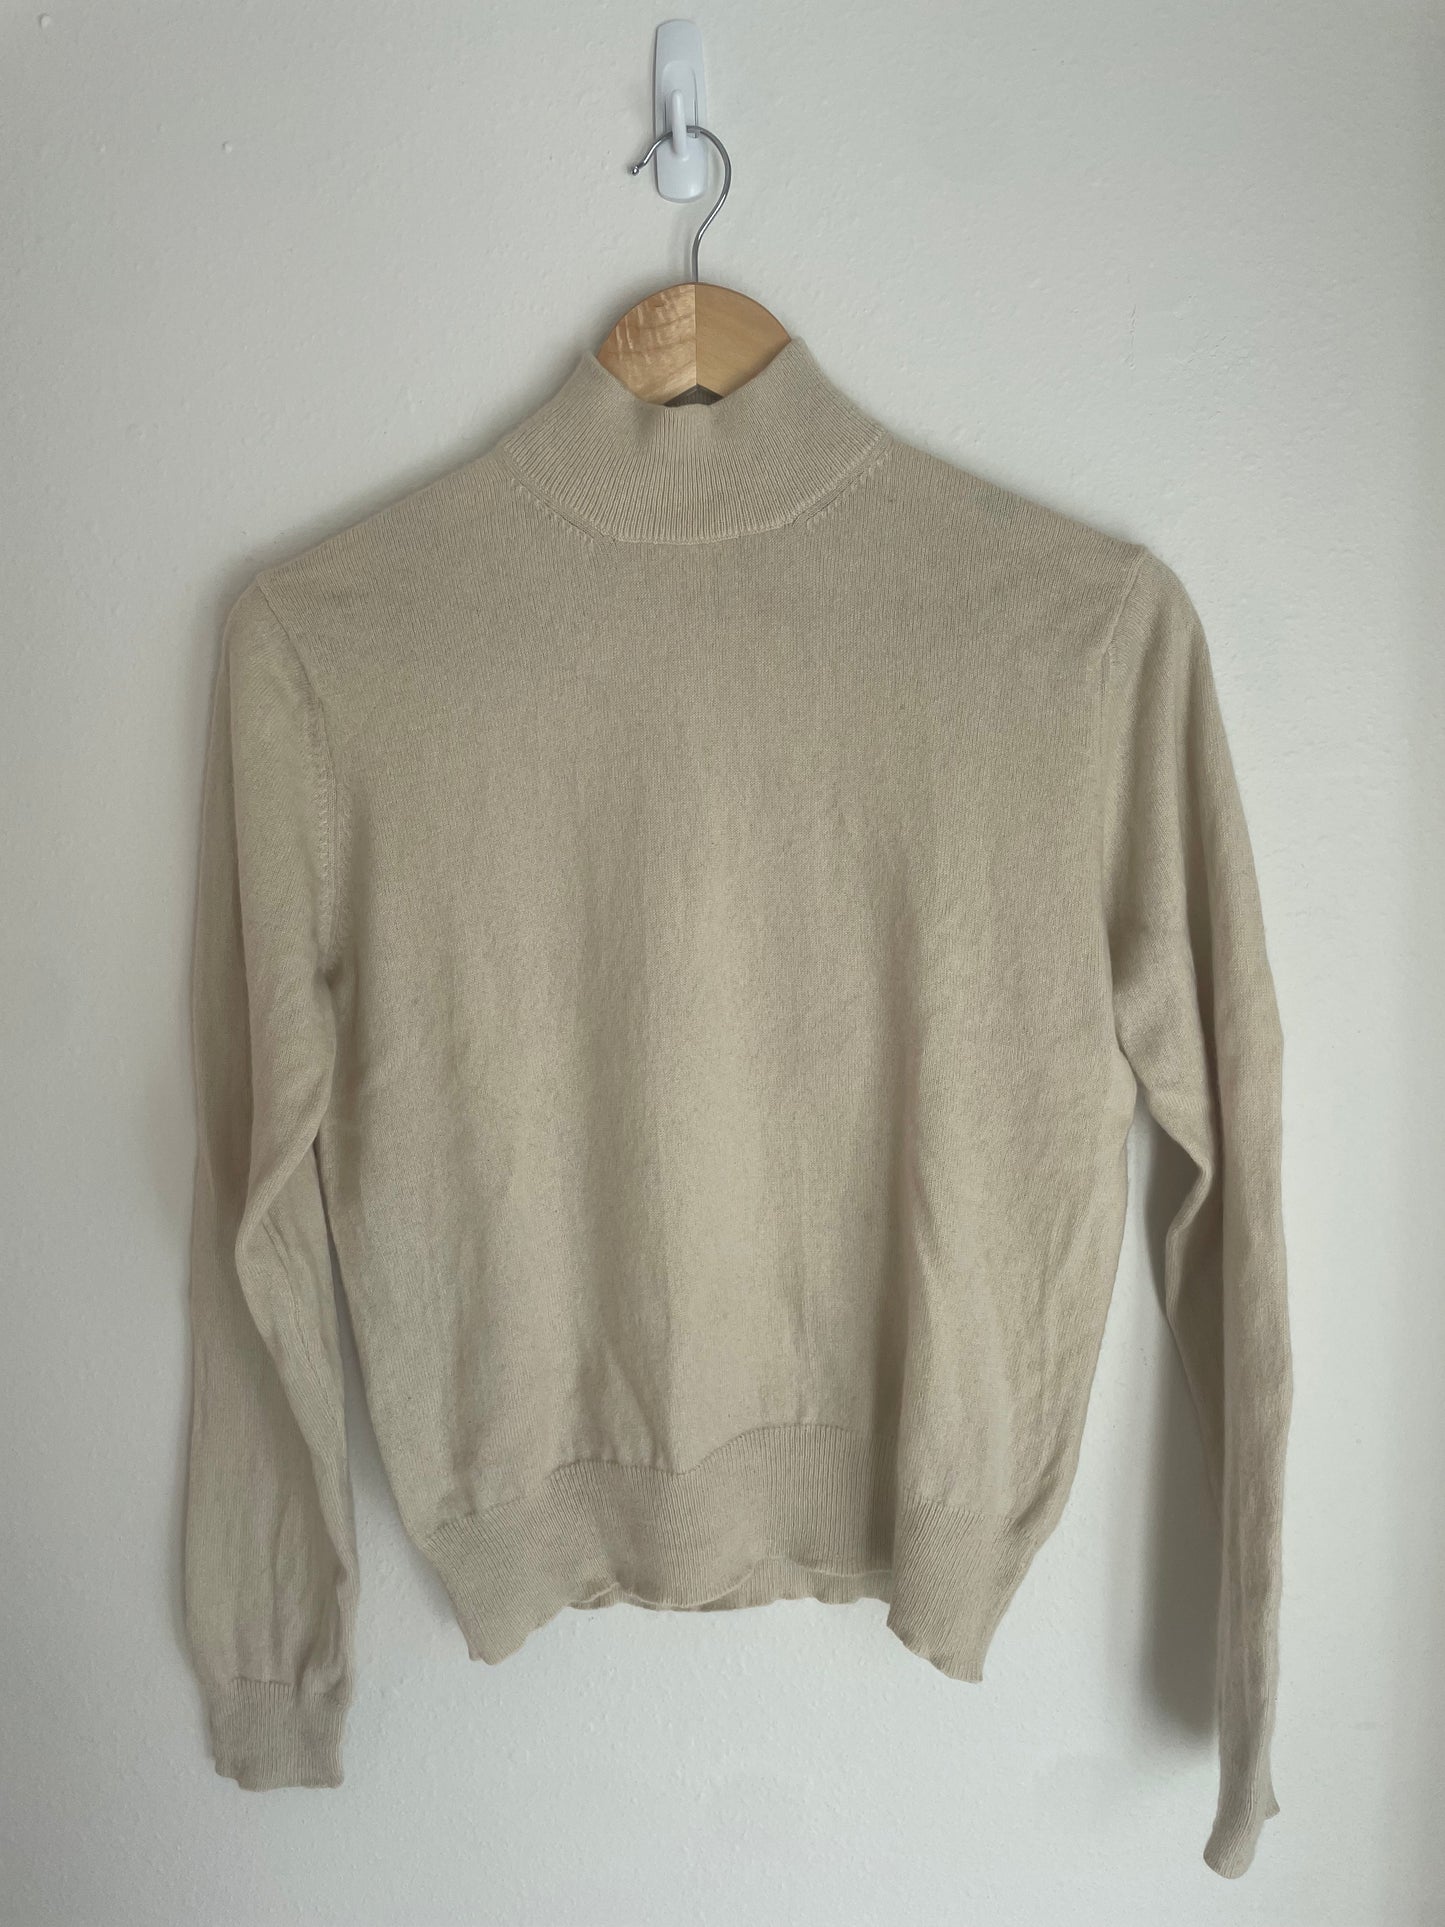 Vintage Cream 100% Cashmere Sweater